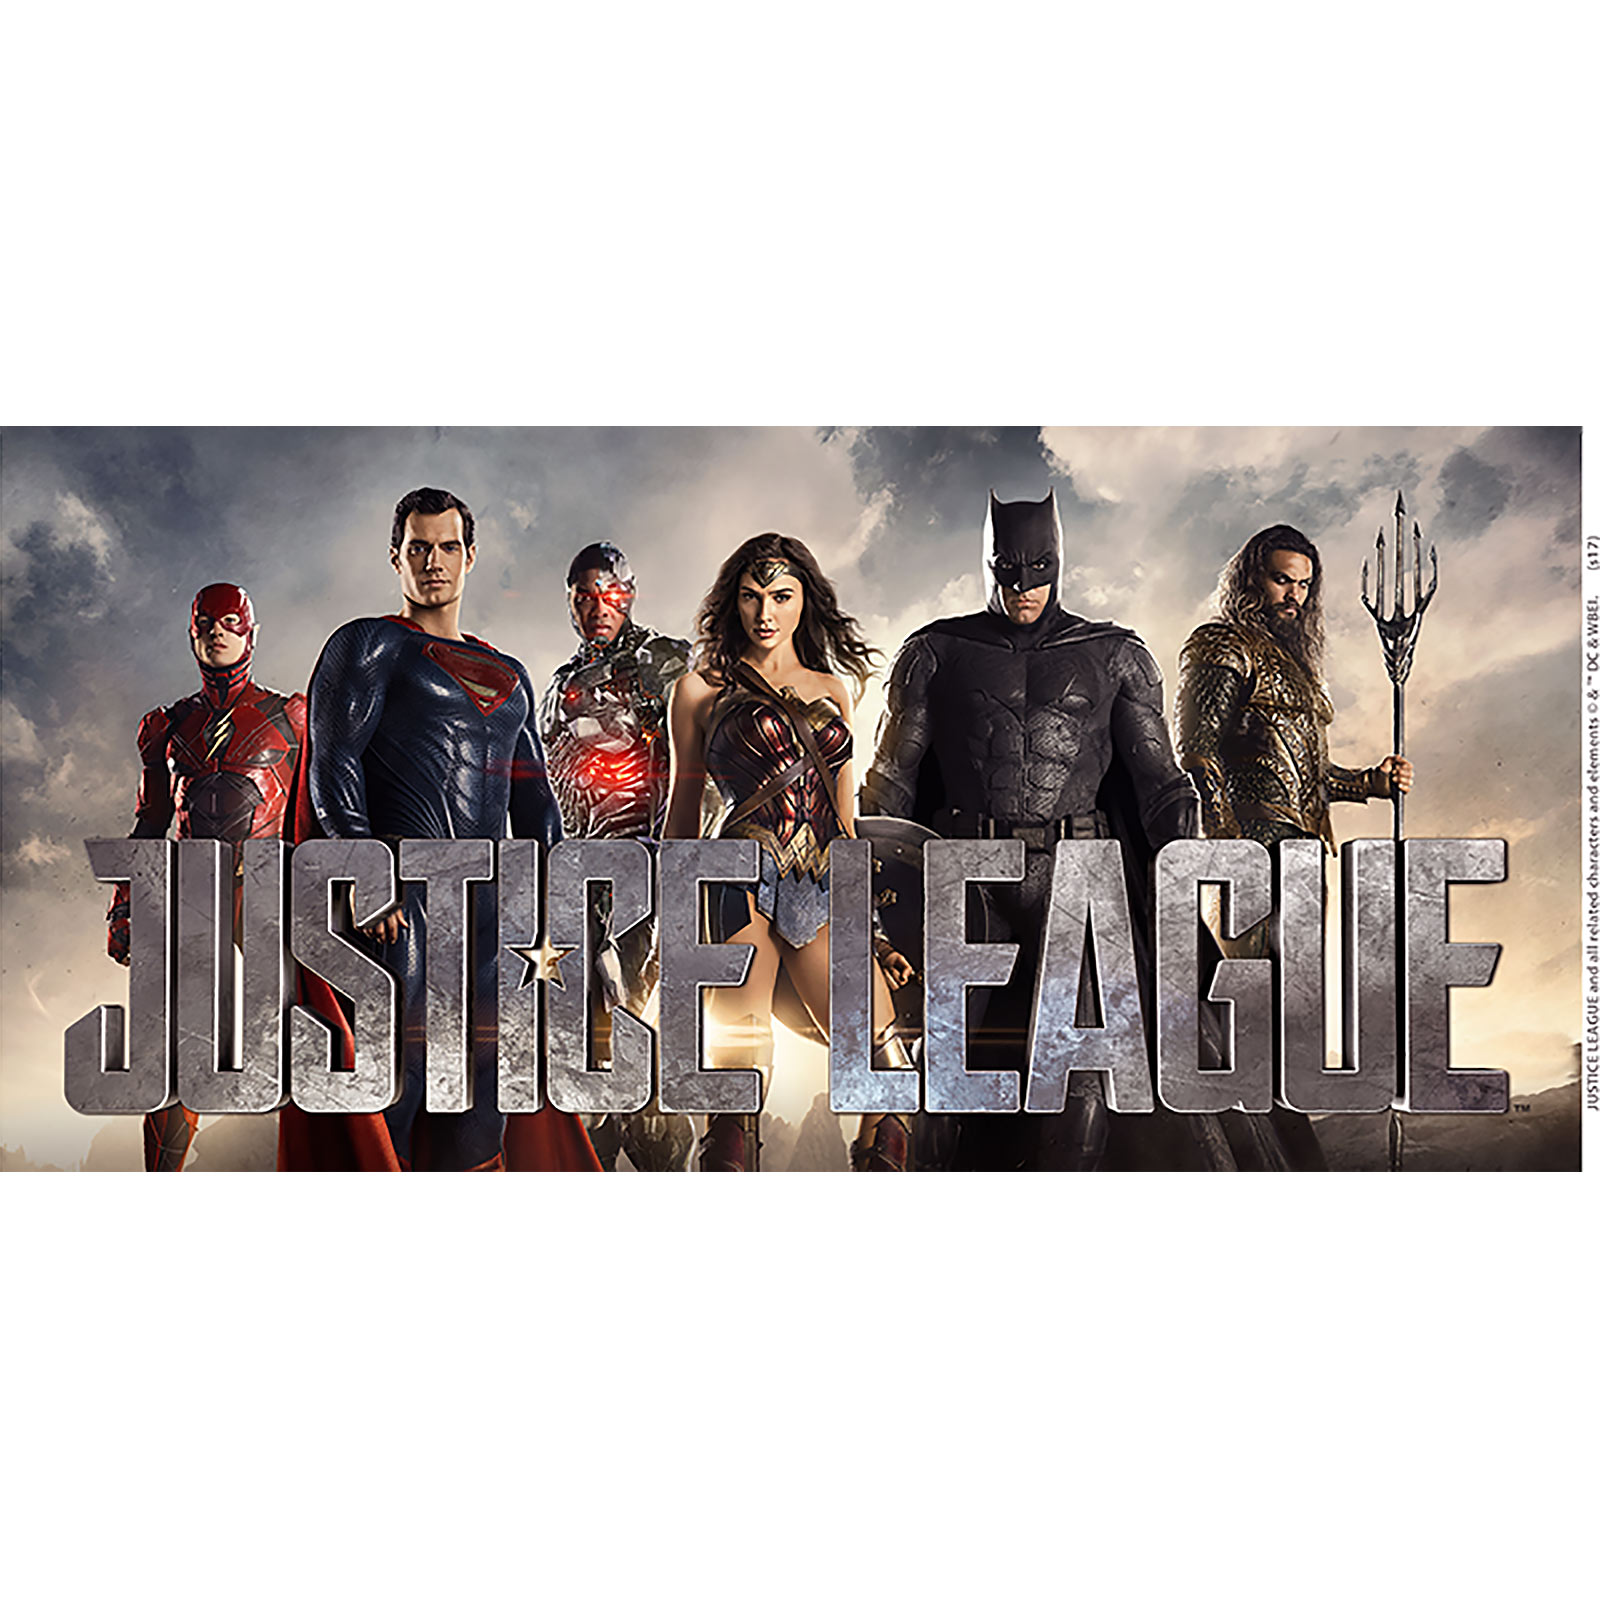 Justice League - Collage Mug